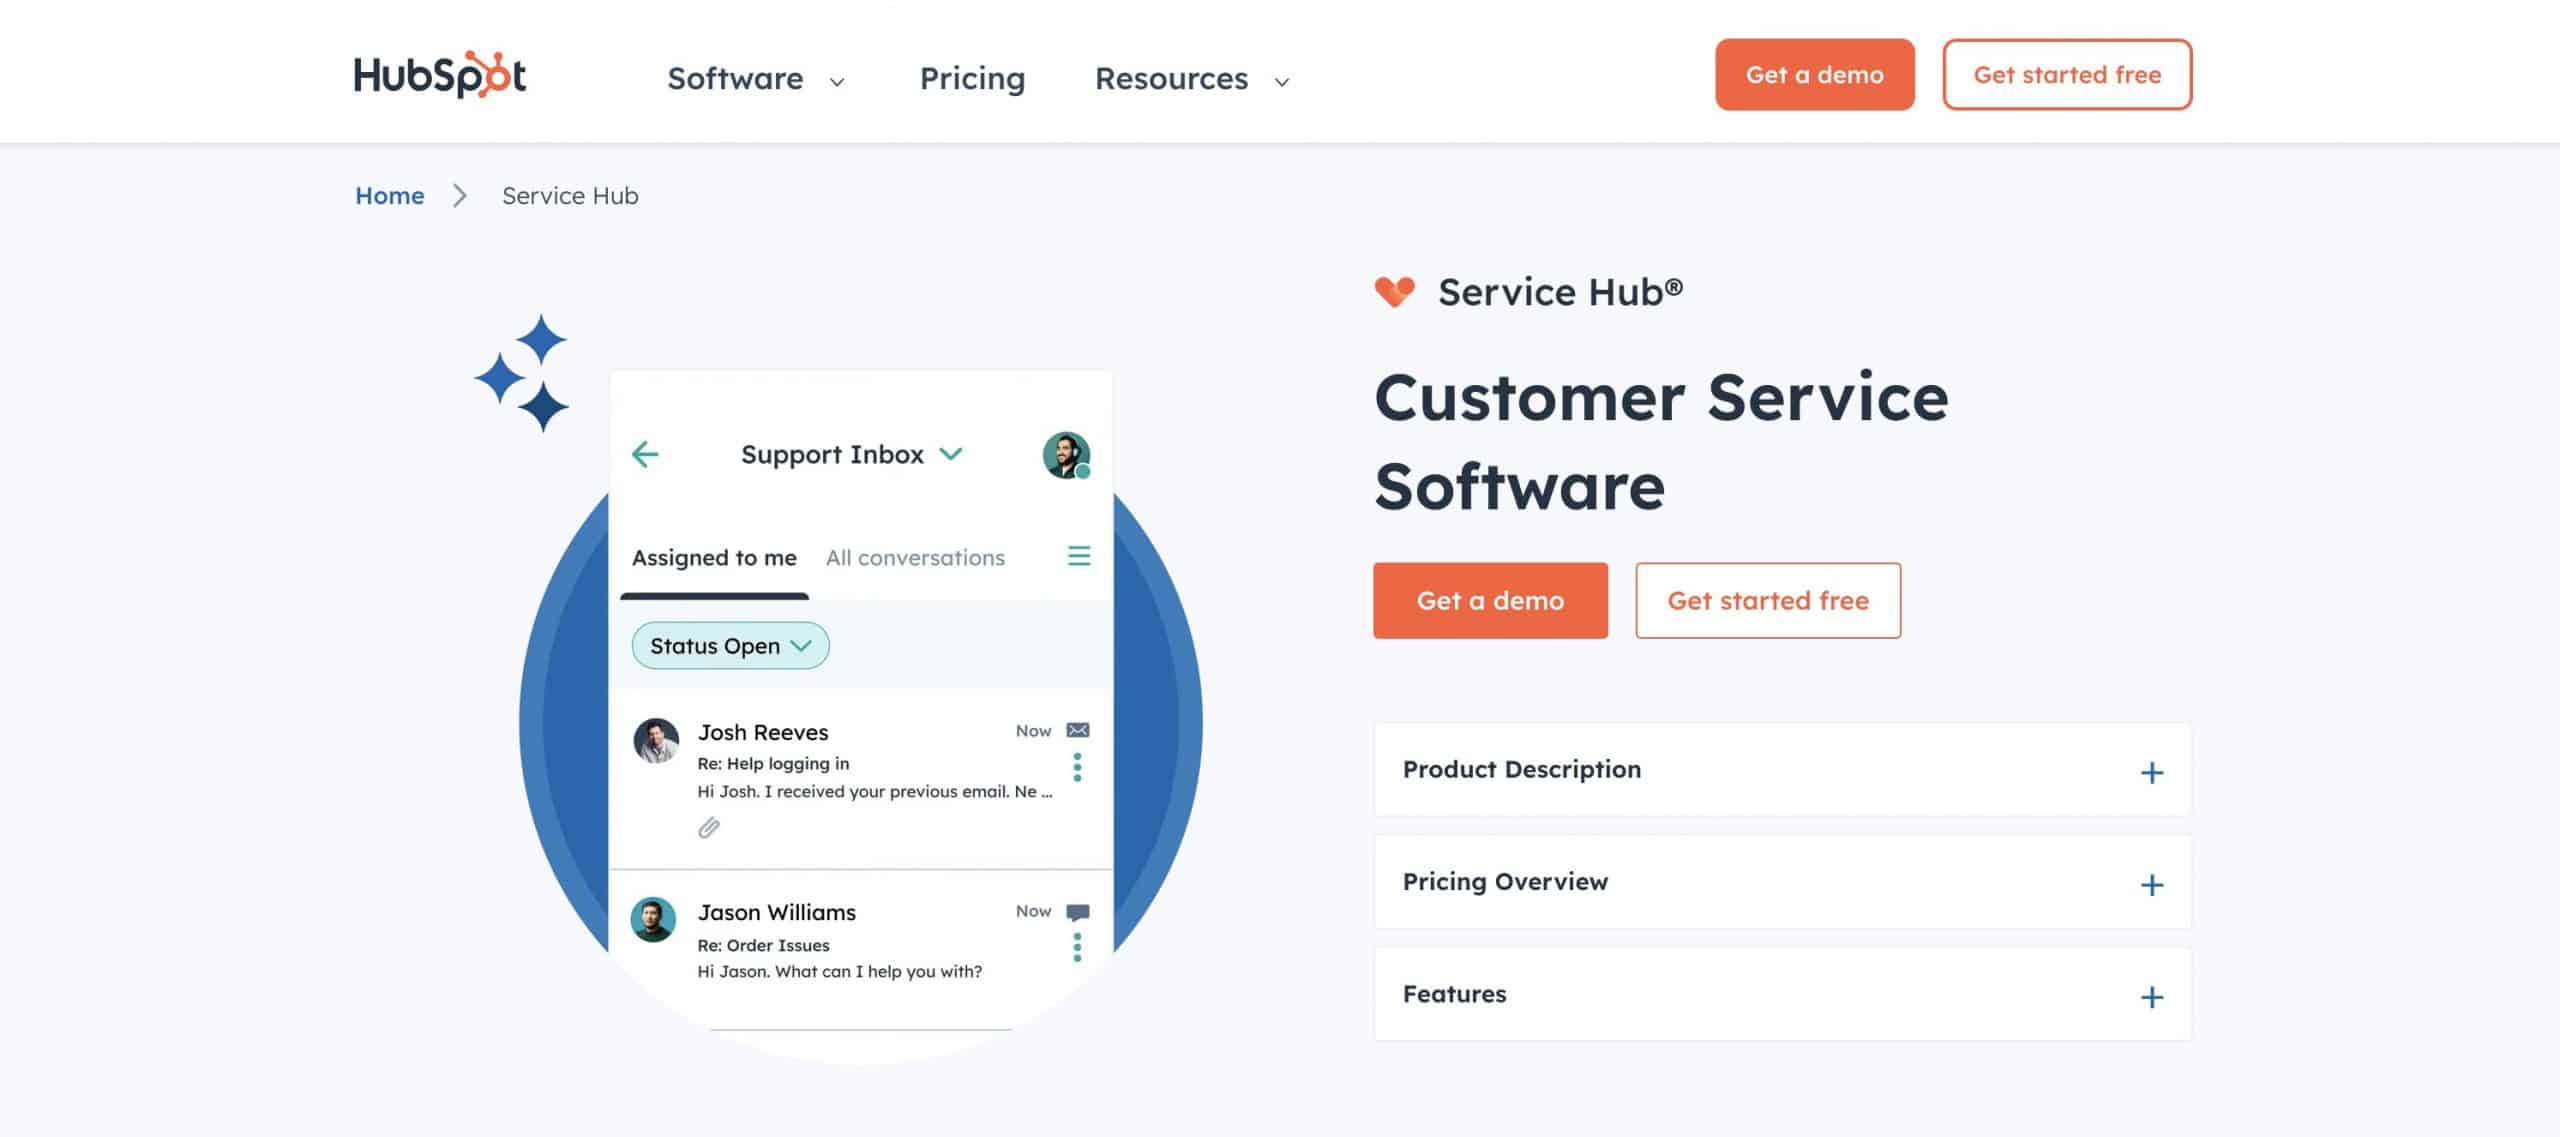 hubspot-service-hub